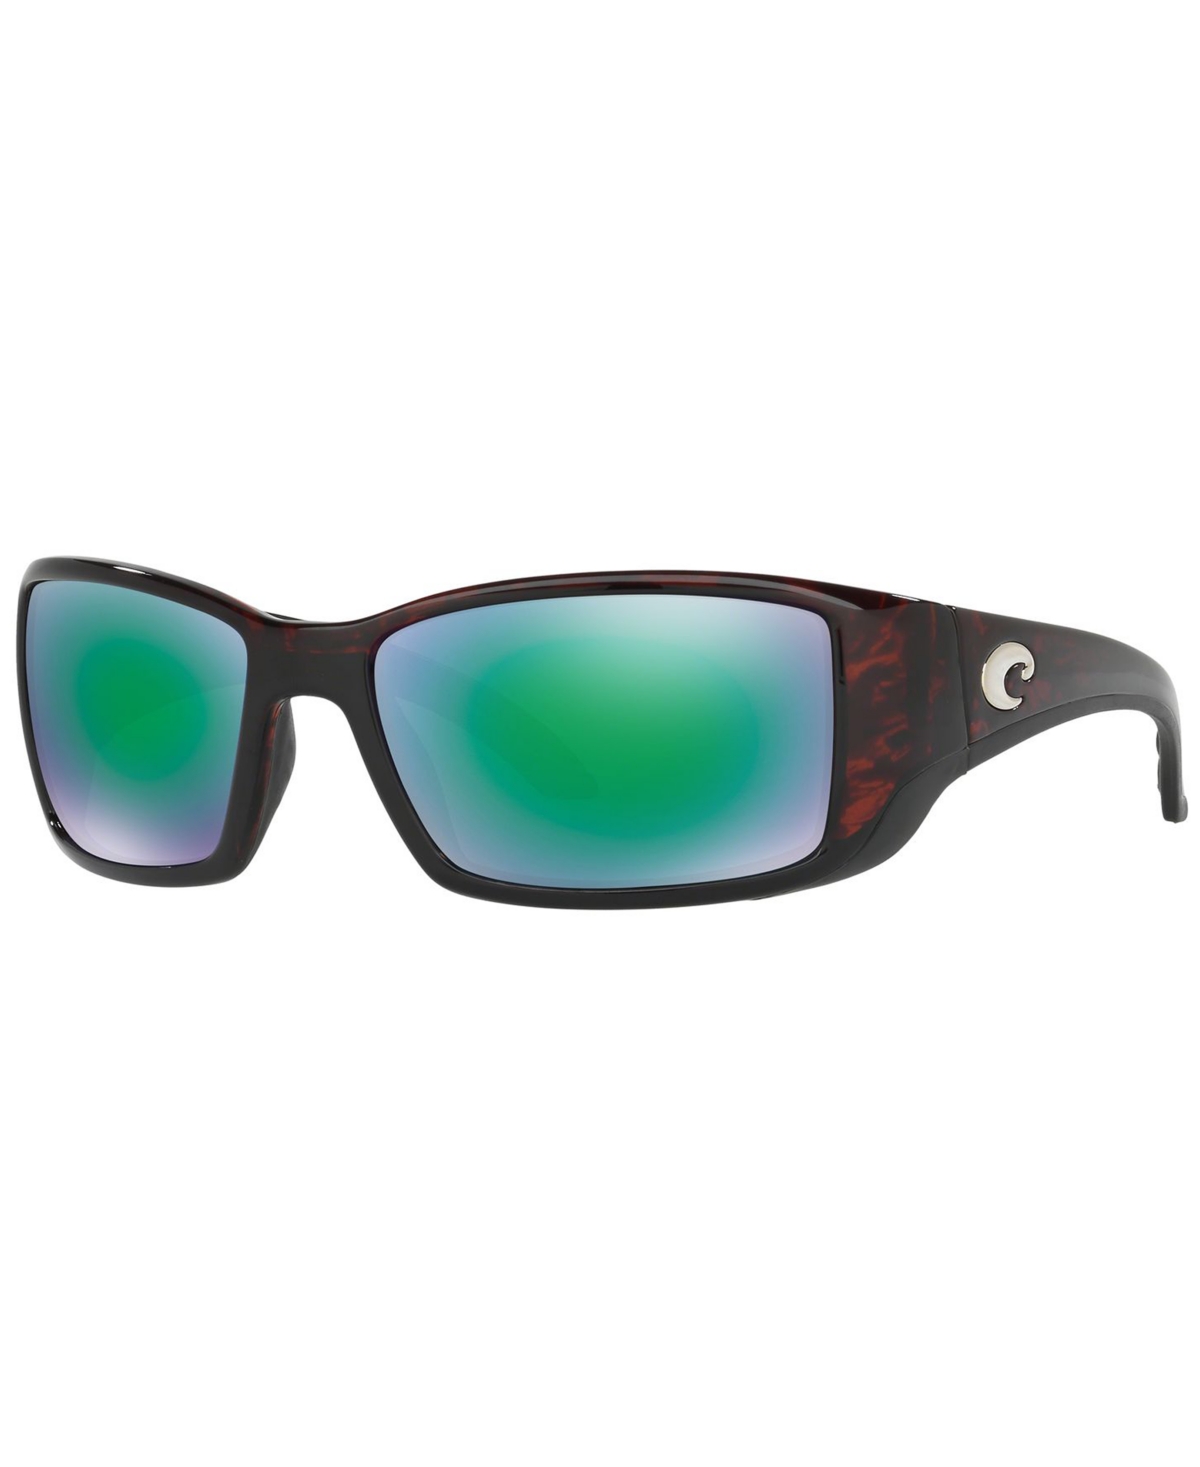 Polarized Sunglasses, Blackfin - GREY MATTE/BLUE MIRROR